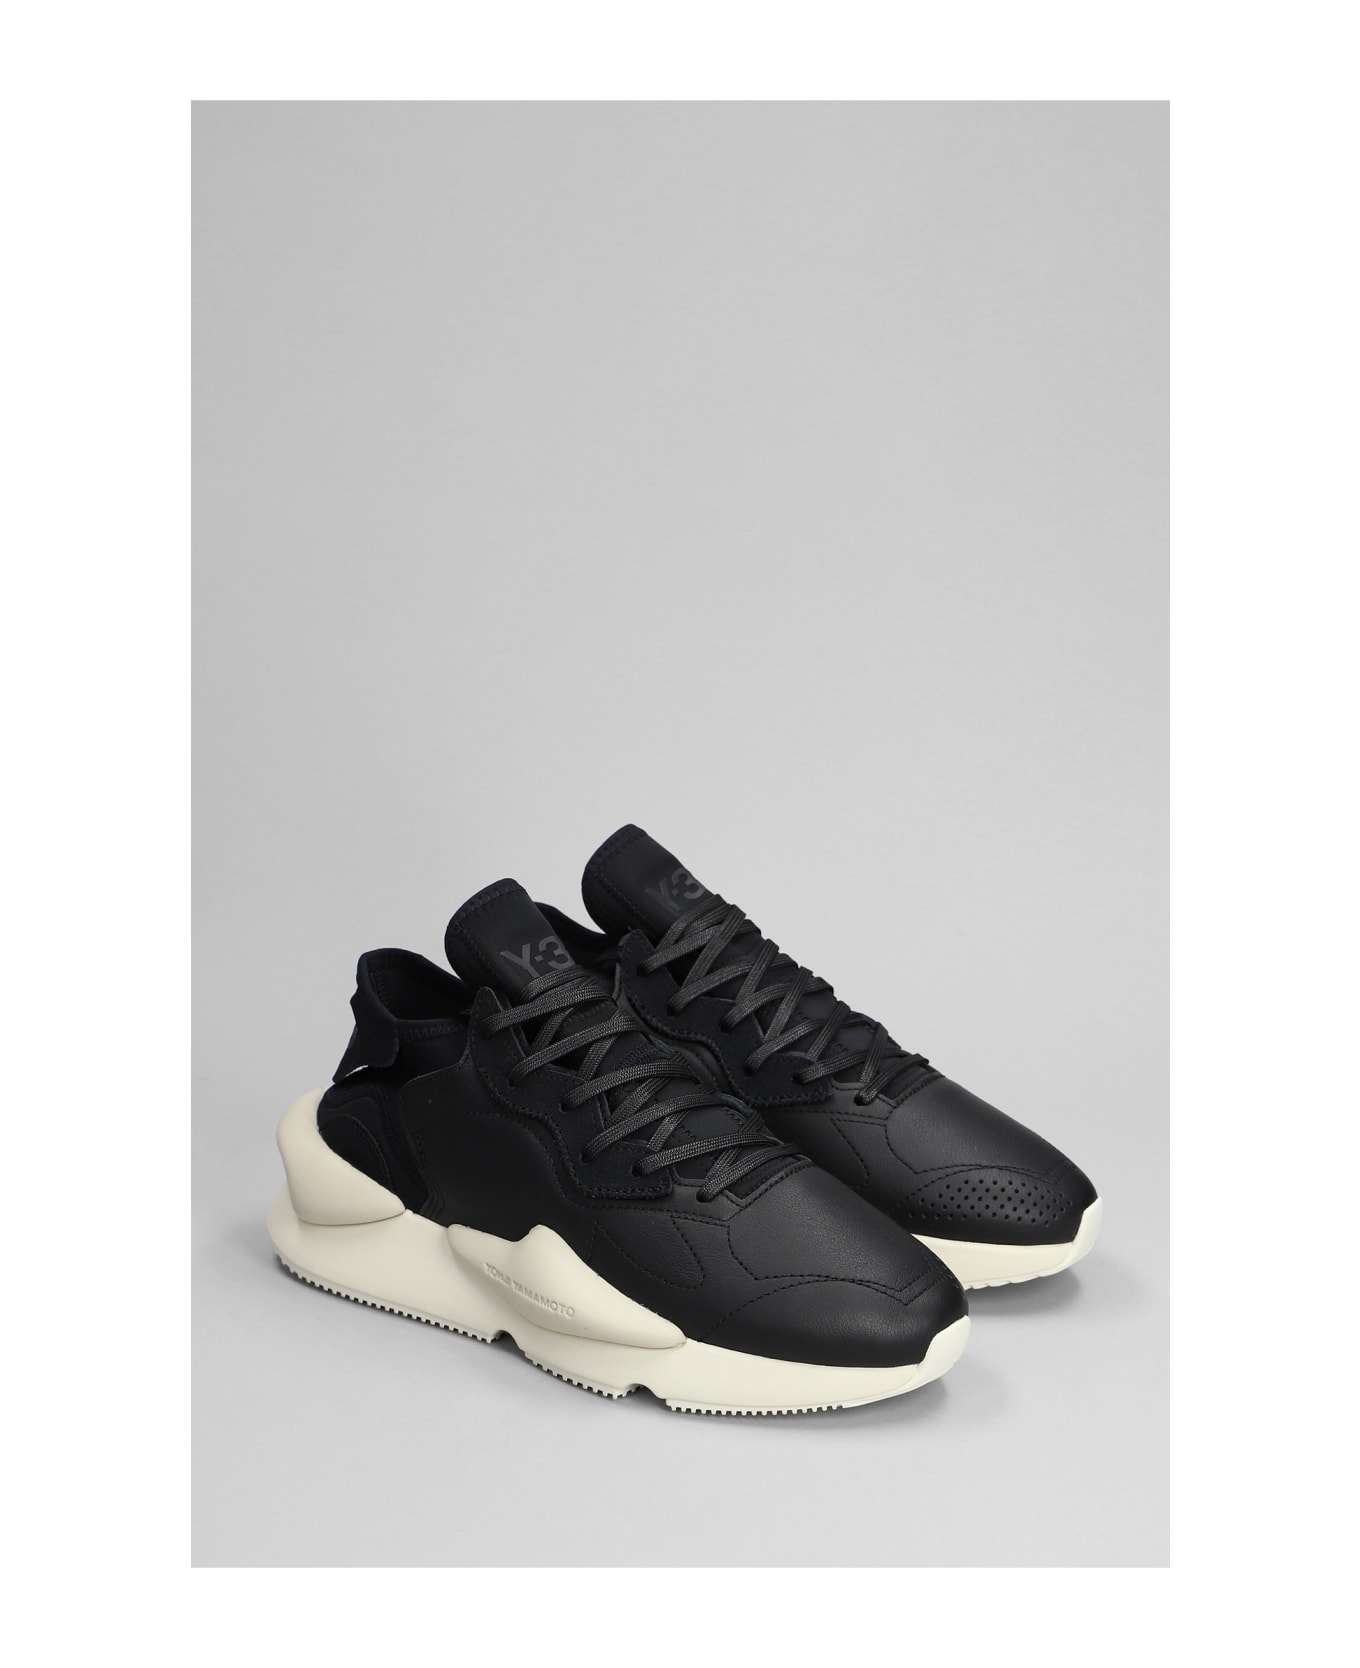 Y-3 Black Leather Blend Sneakers - Black/owhite/cbro